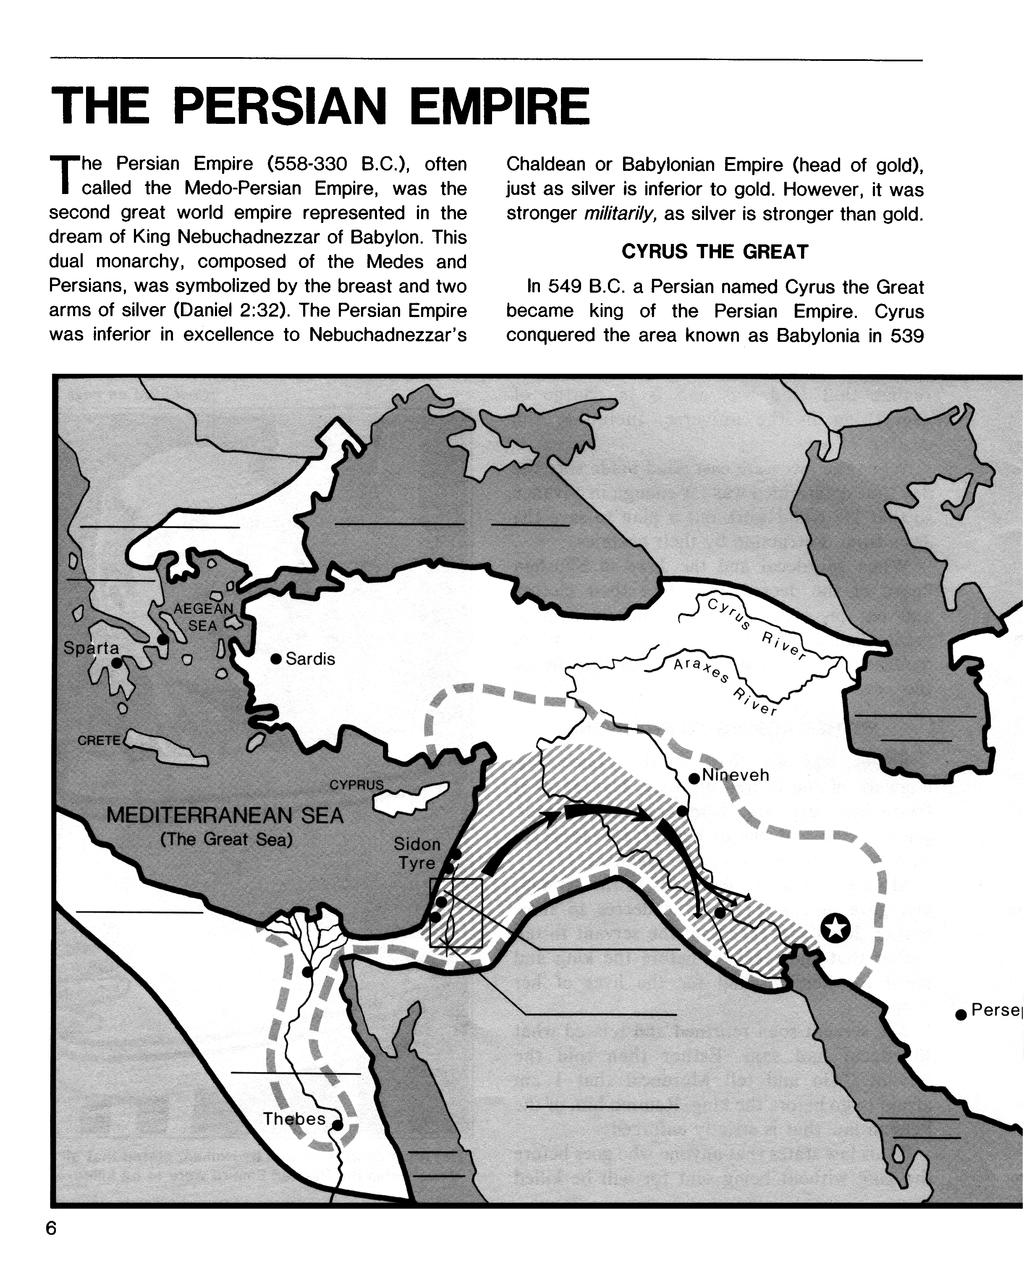 THE PERSIAN EMPIRE he Persian Empire (558-330 B.C.), often called the Medo-Persian Empire, was the second great world empire represented in the dream of King Nebuchadnezzar of Babylon.